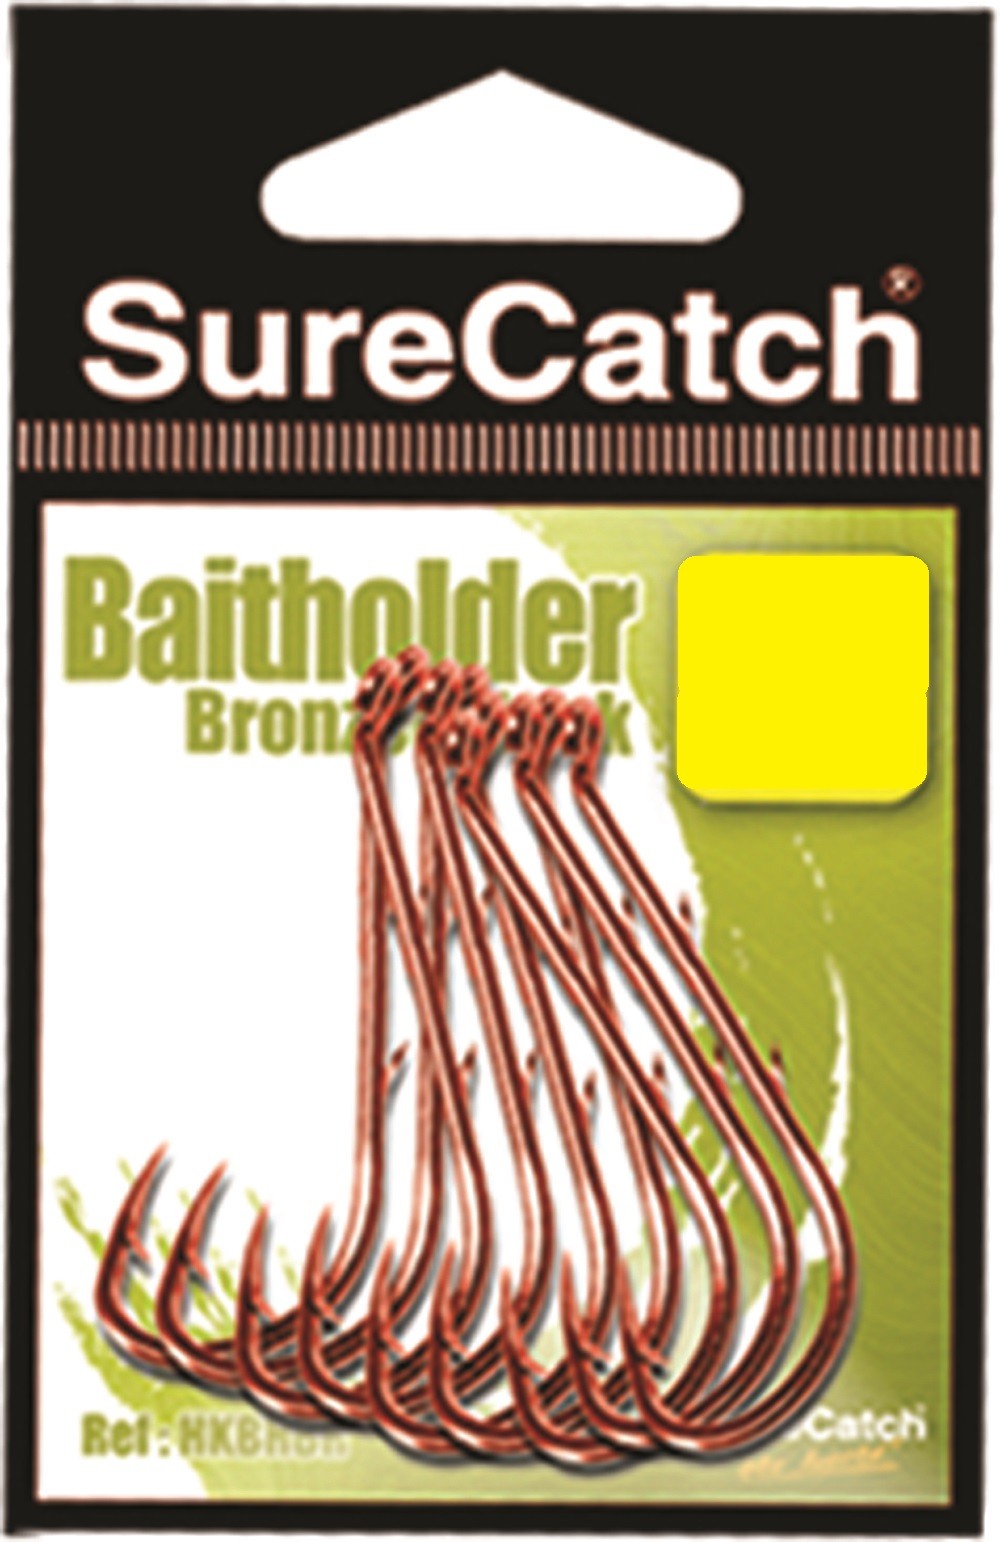 Sure Catch Bronze Baitholder Hook (8 per Pack) - Size 1/0